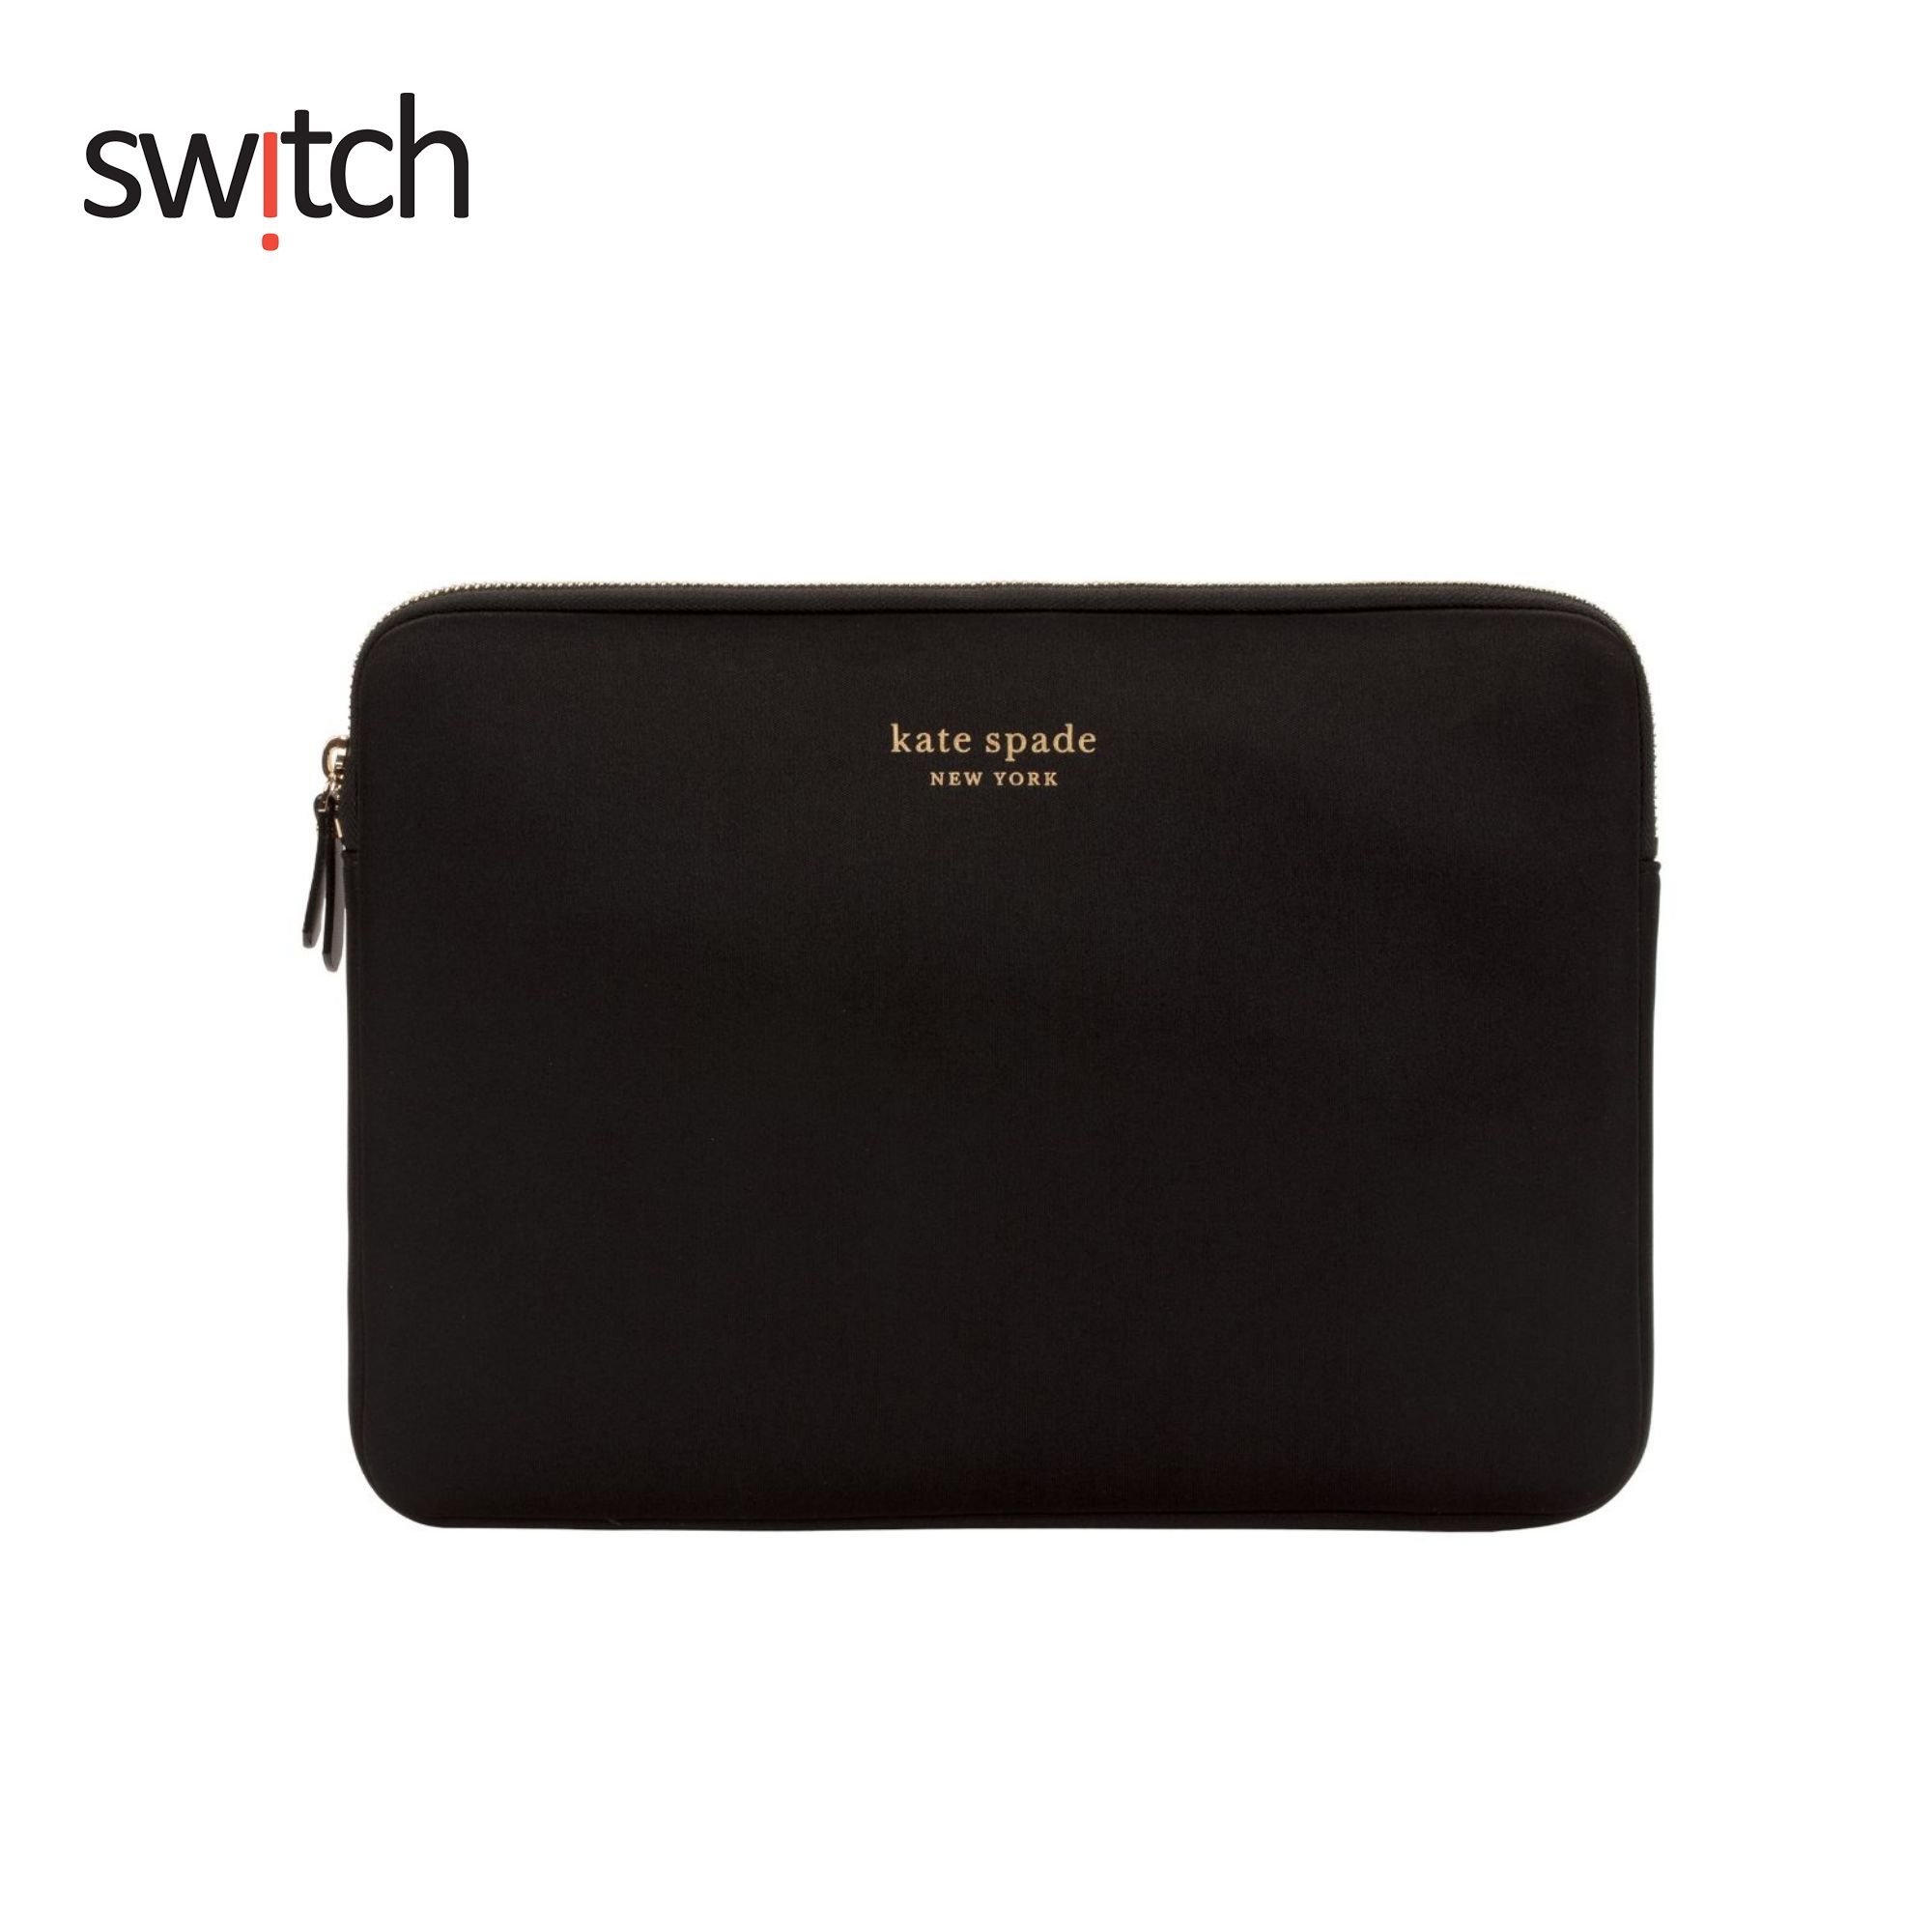 Kate Spade New York Slim Sleeve for MacBook Air/Pro 13-inch